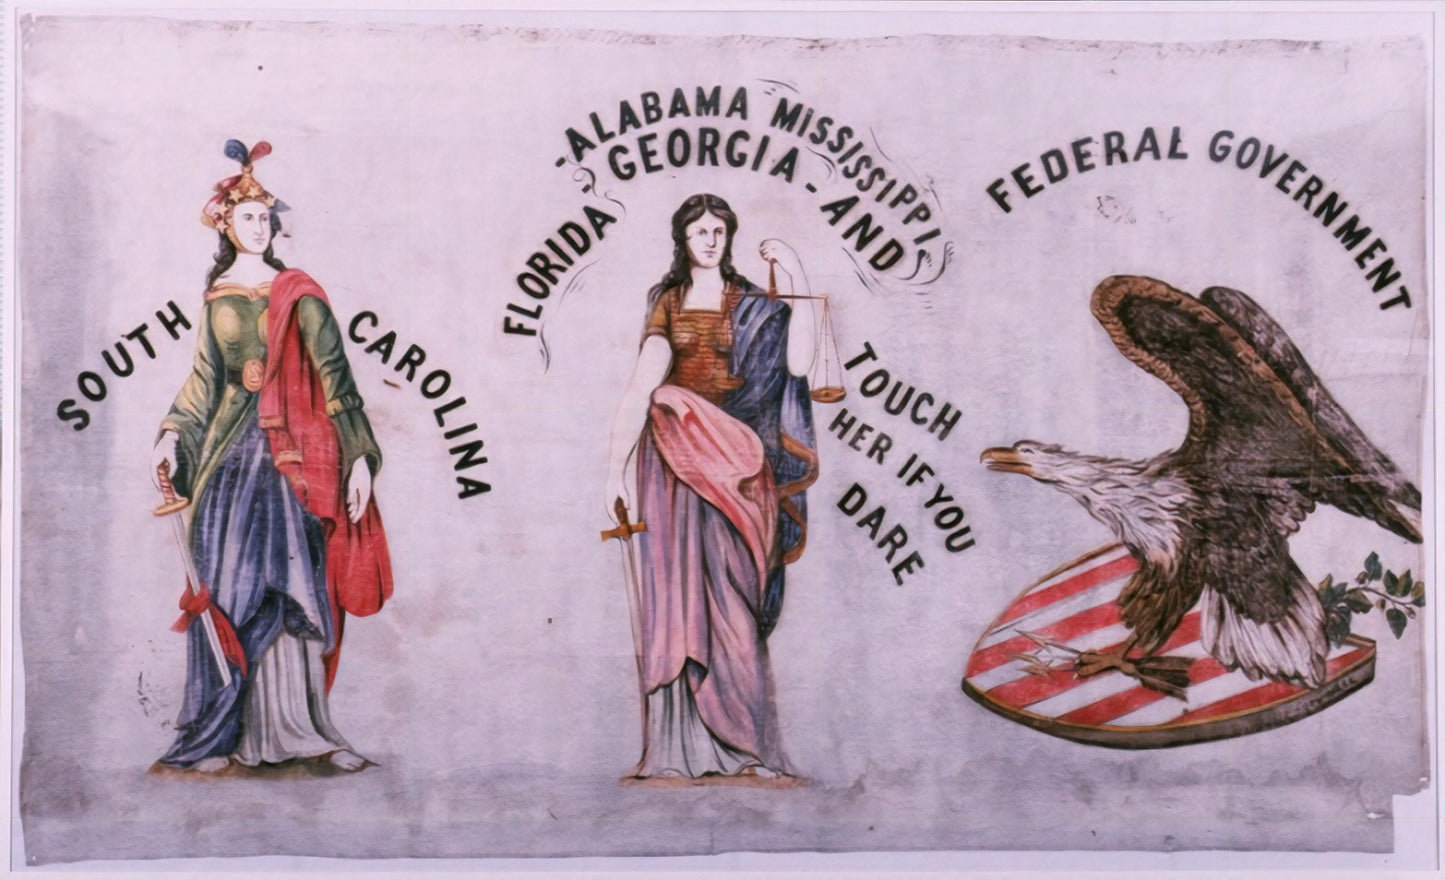 “Touch her if you dare” Savannah, Georgia Secession Flag Shirt